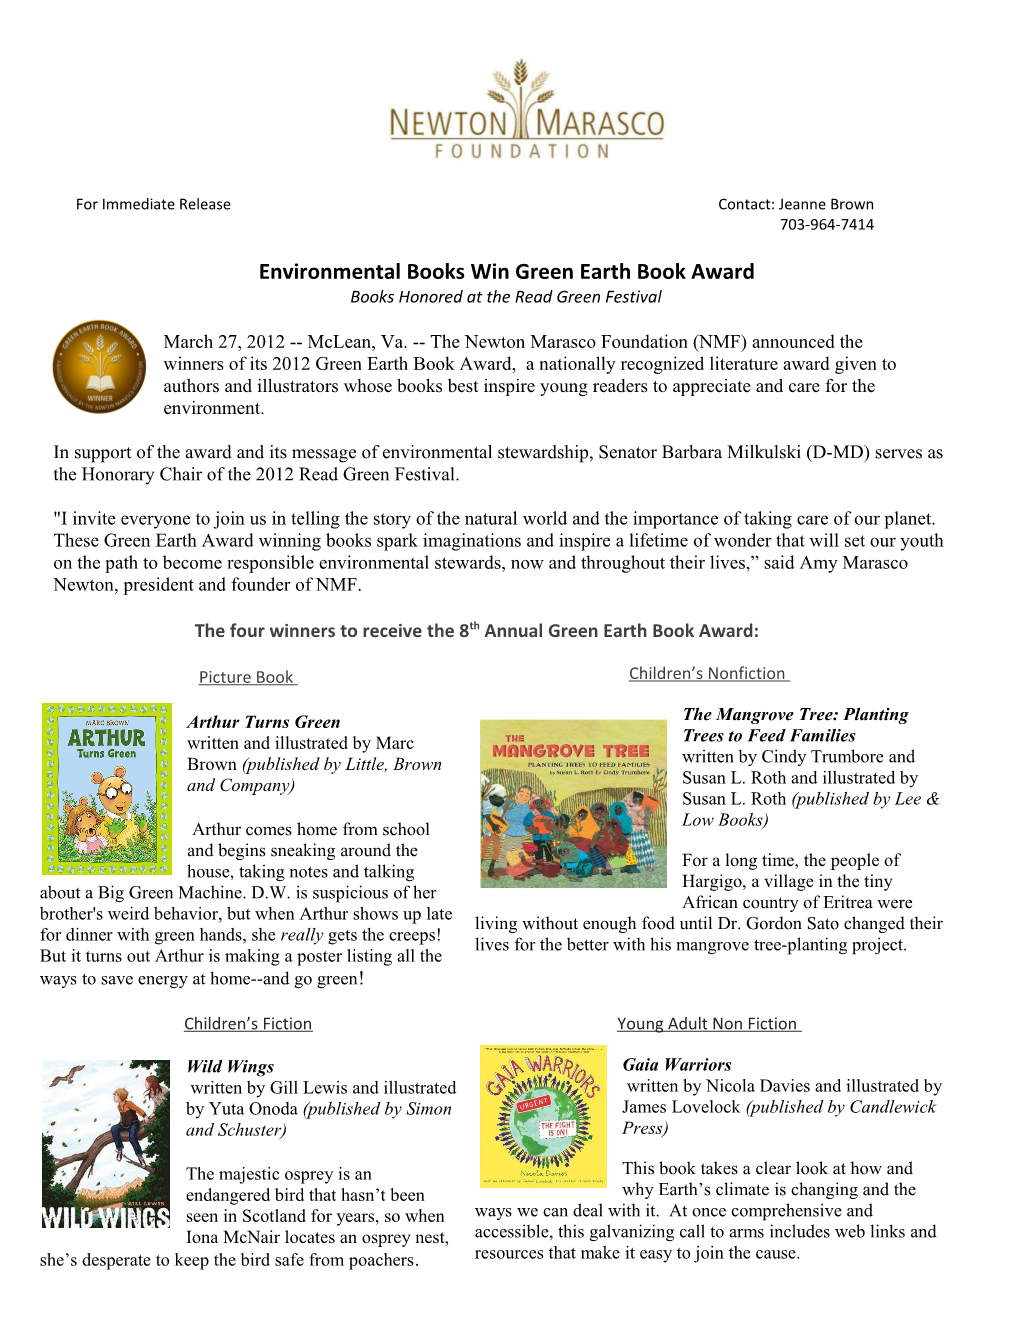 Environmental Books Win Green Earth Book Award